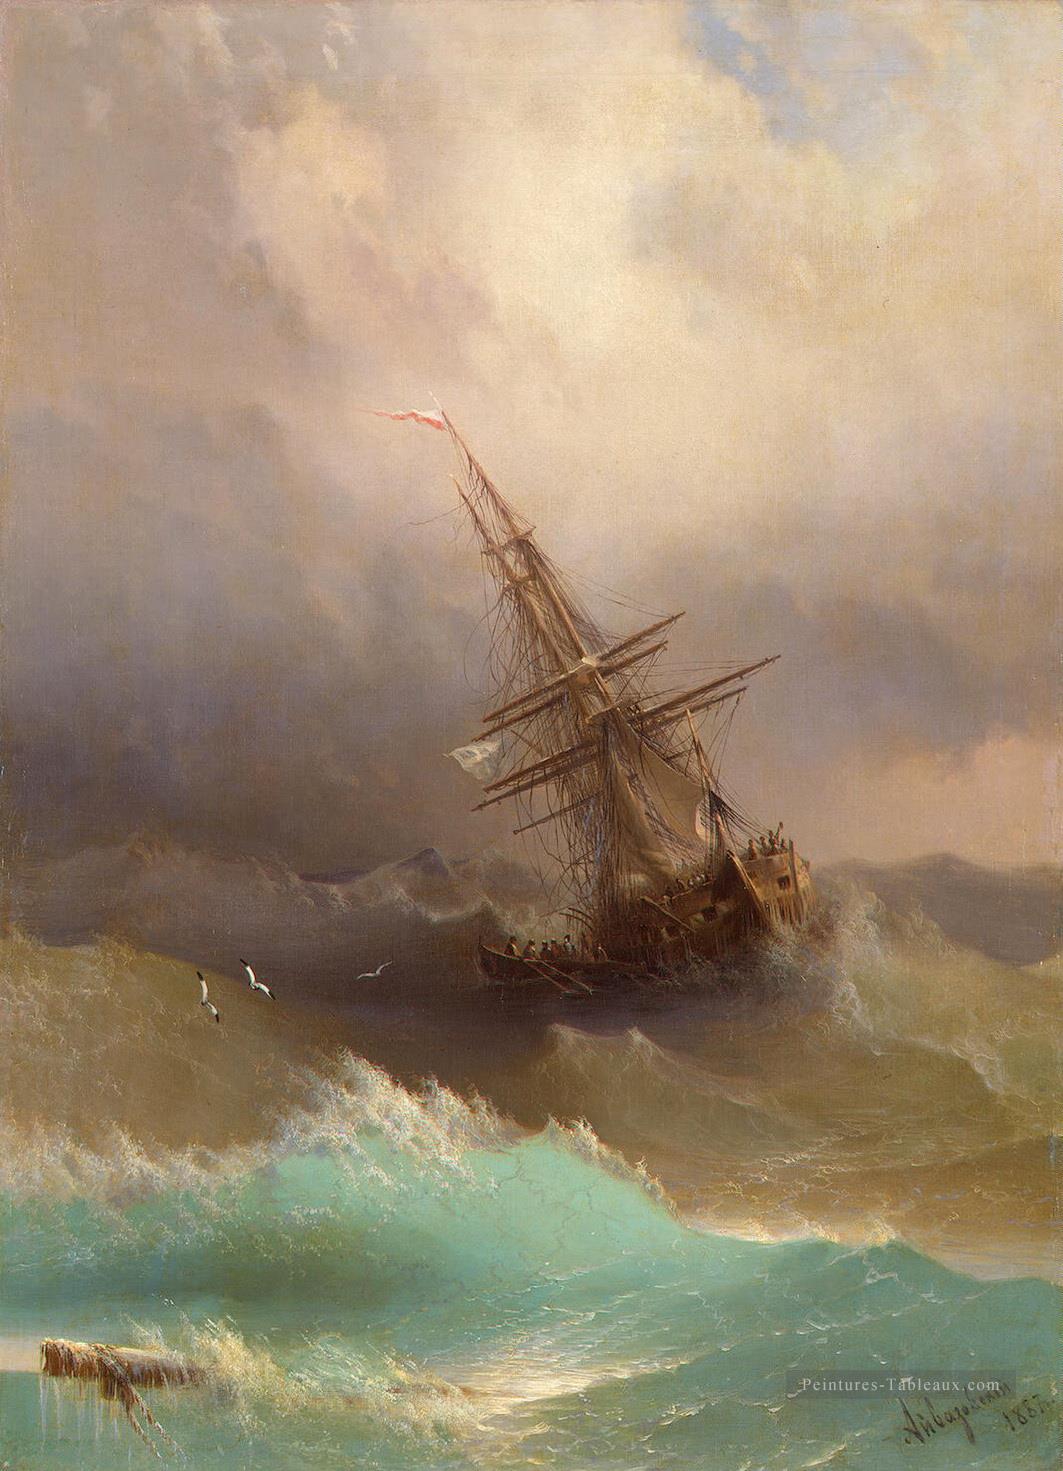 Ivan Aivazovsky embarque dans la mer orageuse Vagues de l’océan Peintures à l'huile